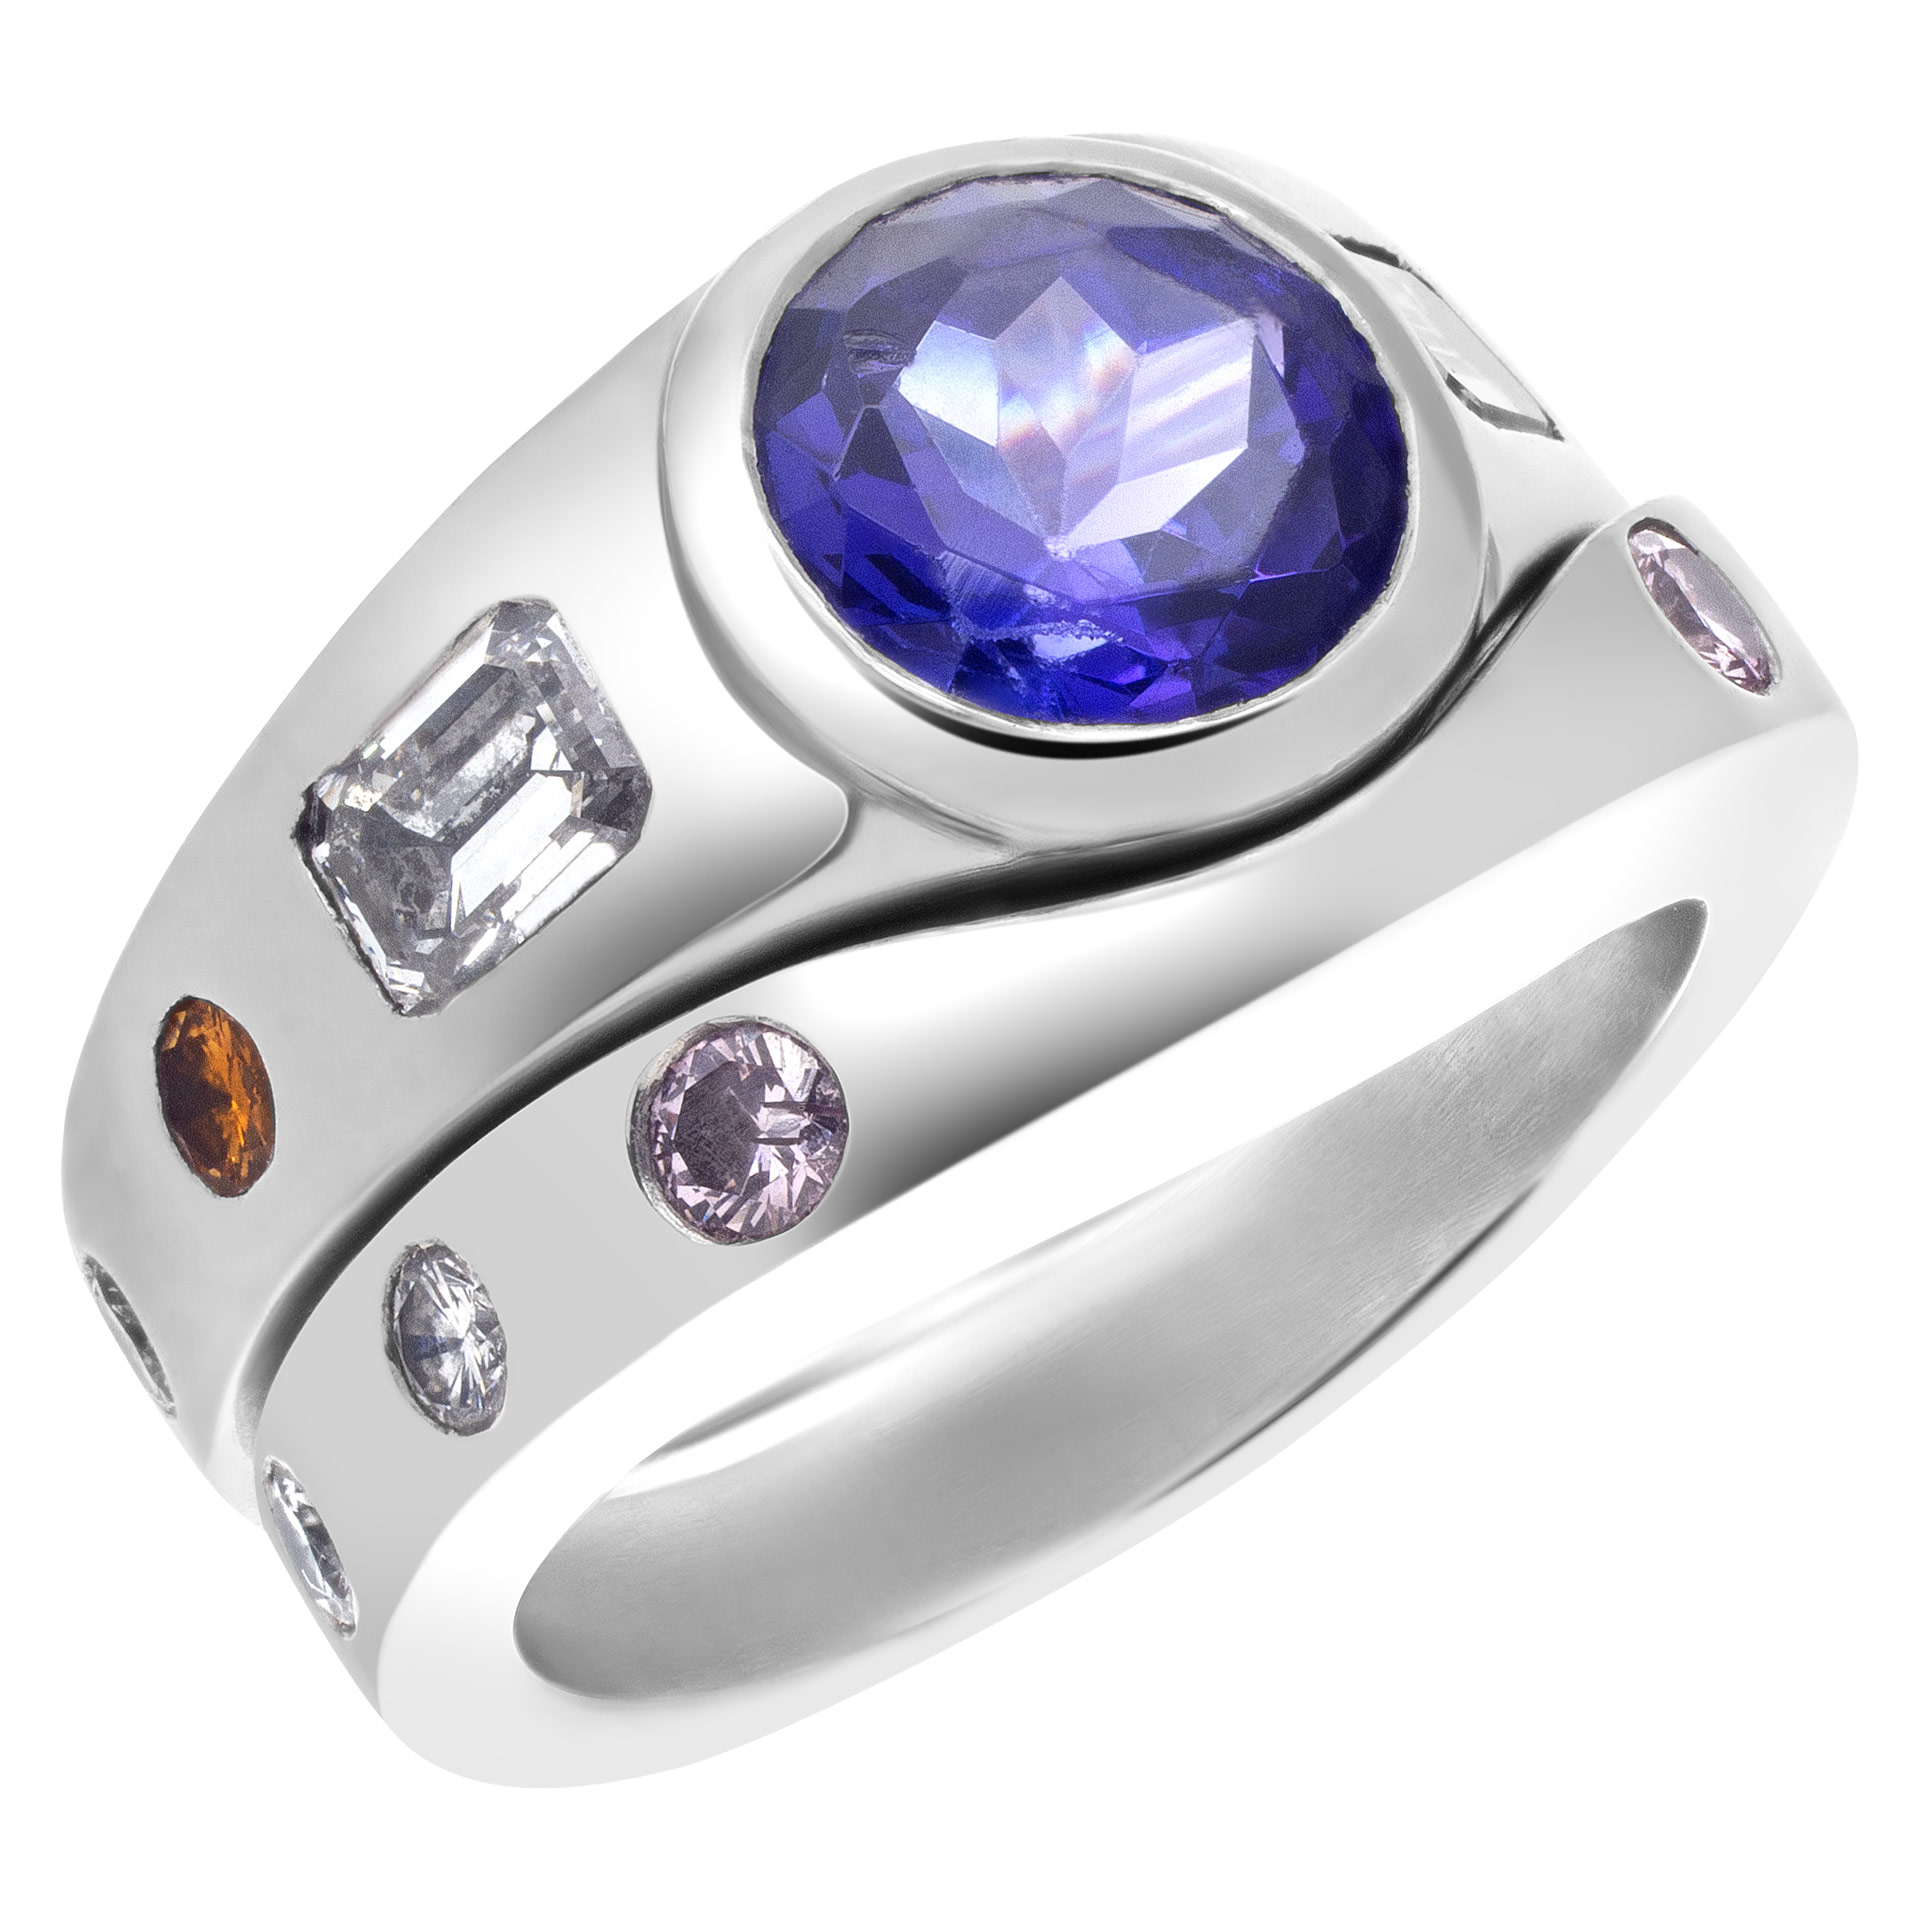 Platinum wedding & engagement rings with tanzanite center stone: white, yellow & pink diamonds image 2